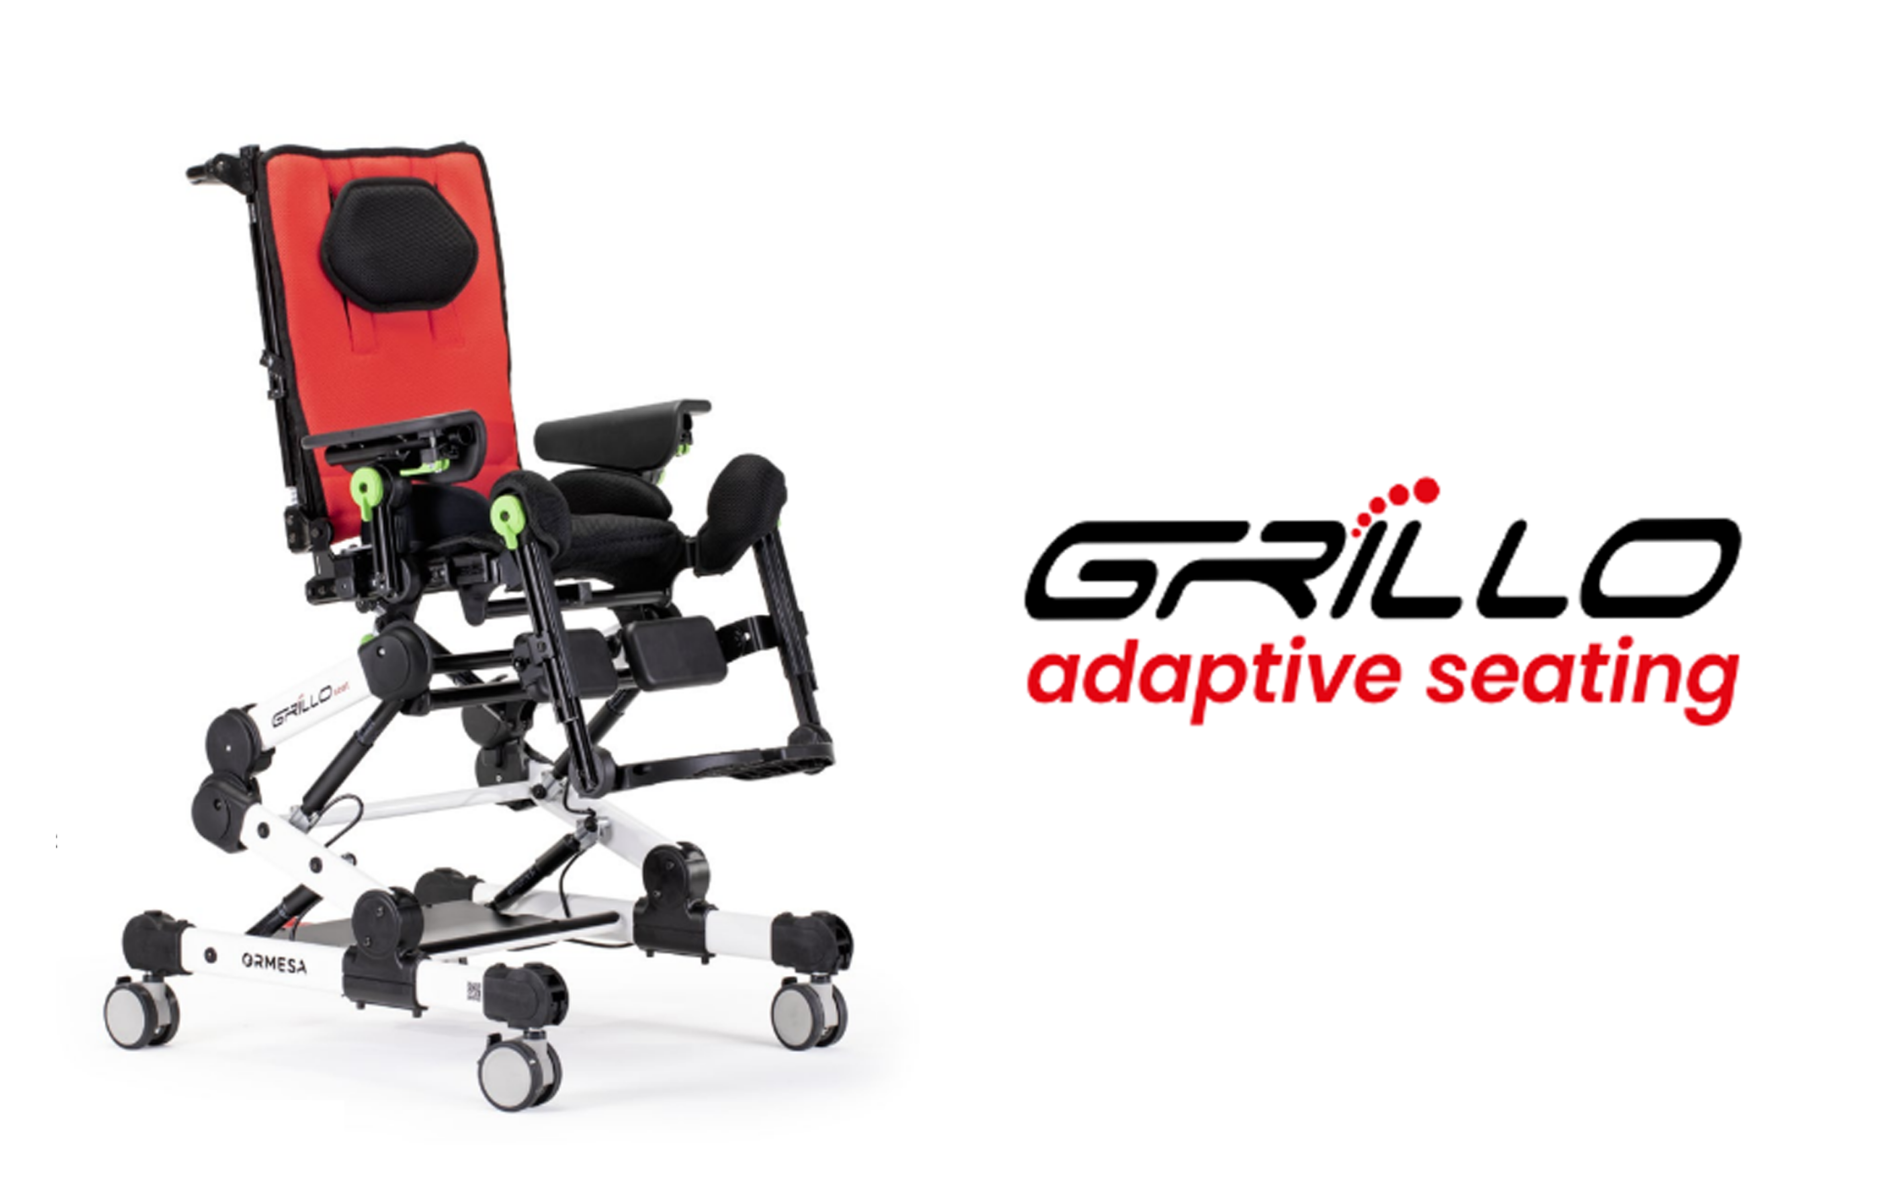 Grillo adaptive seating